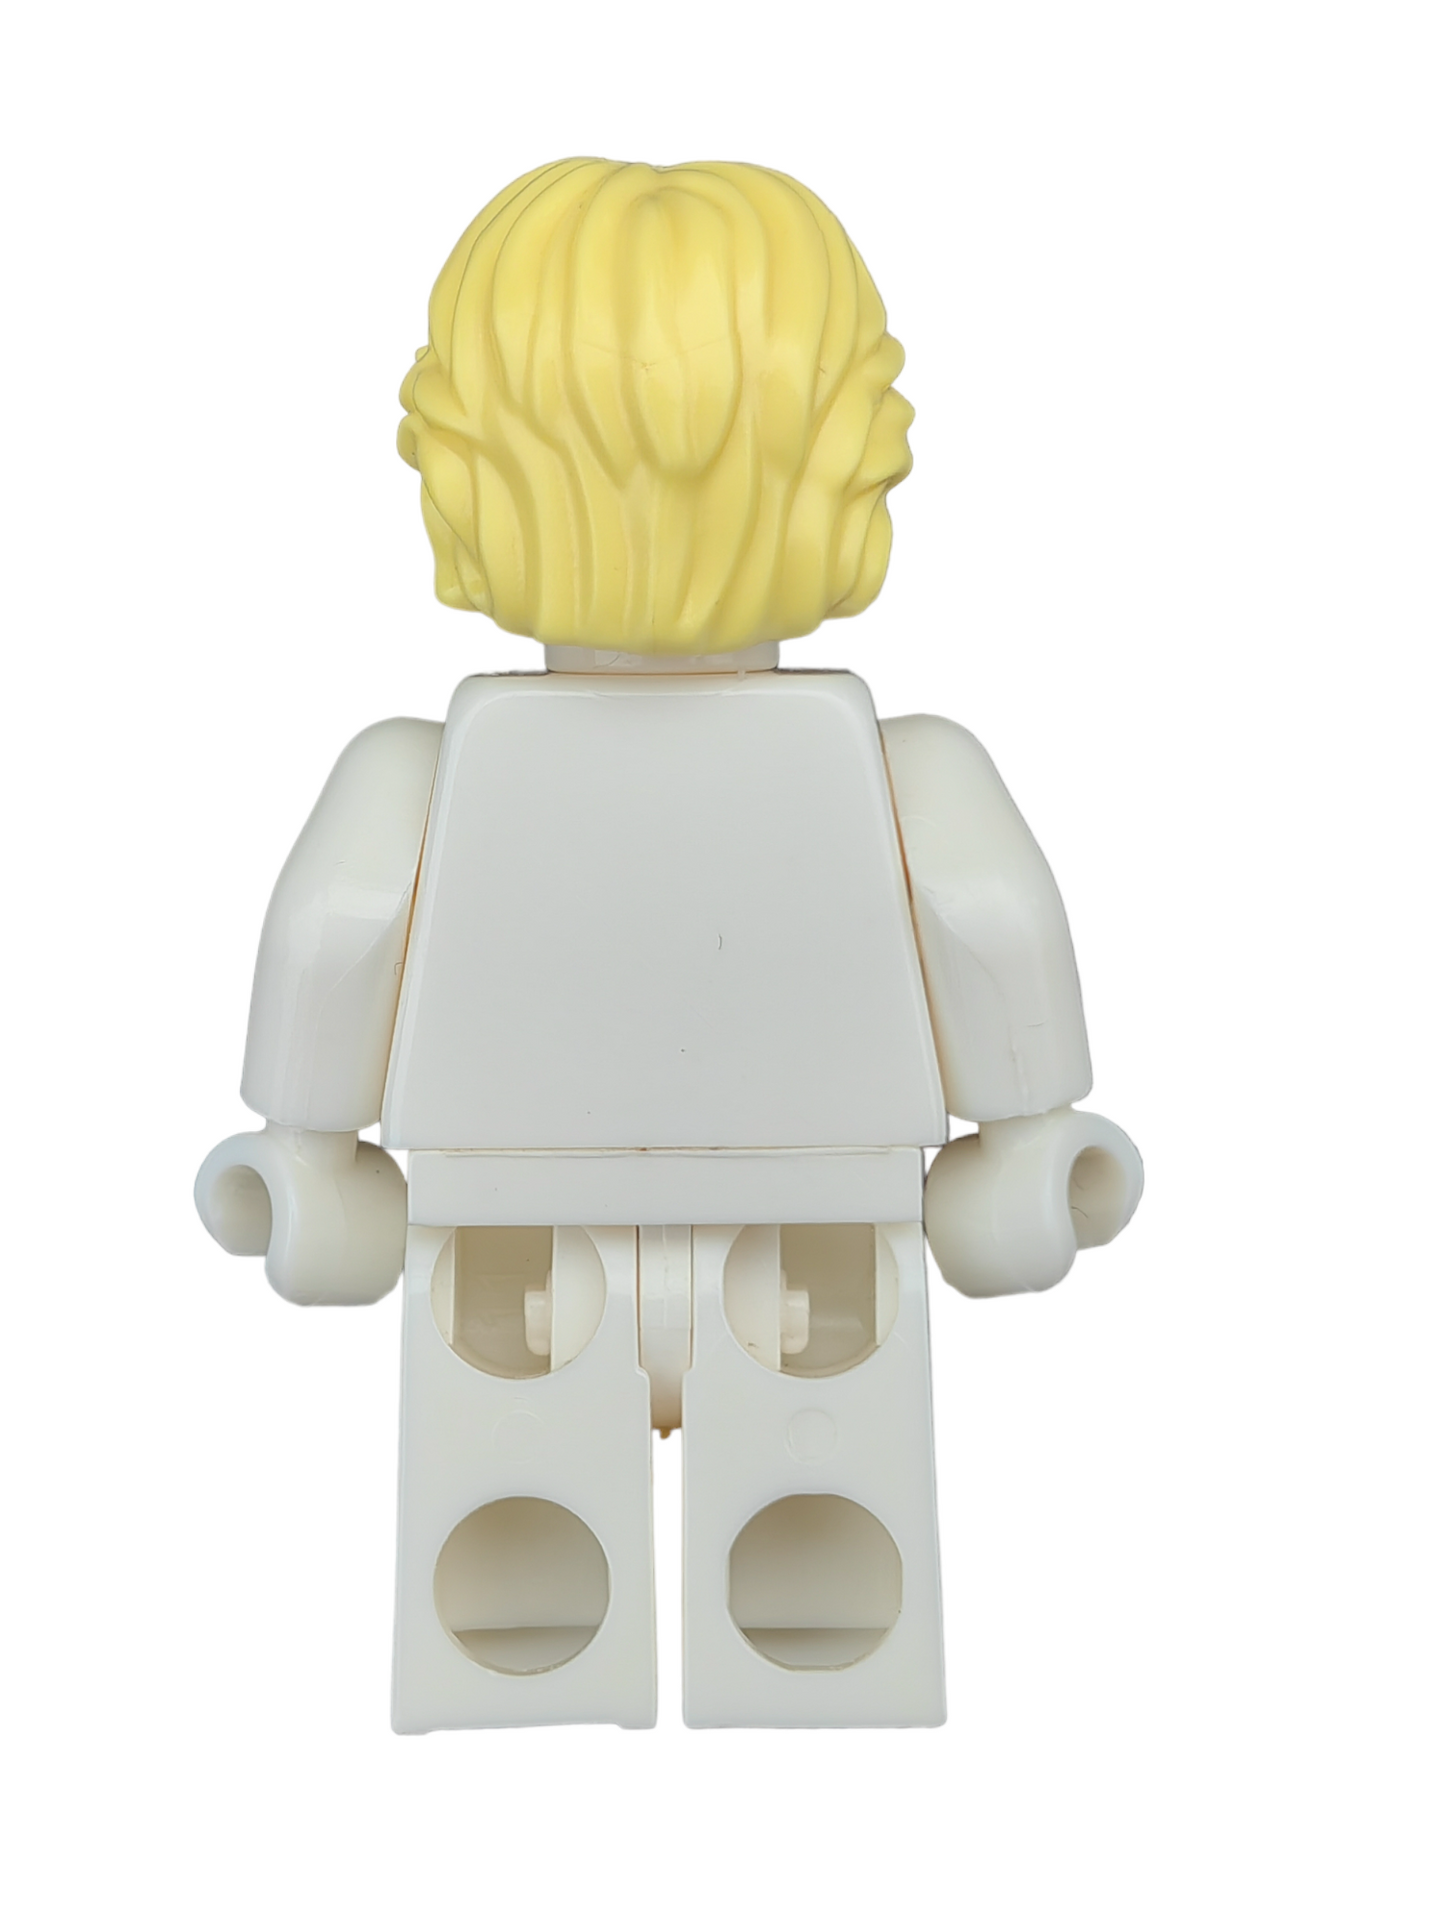 LEGO Wig, Yellow Hair Short / Medium Length Wavy with Center Parting - UB1201